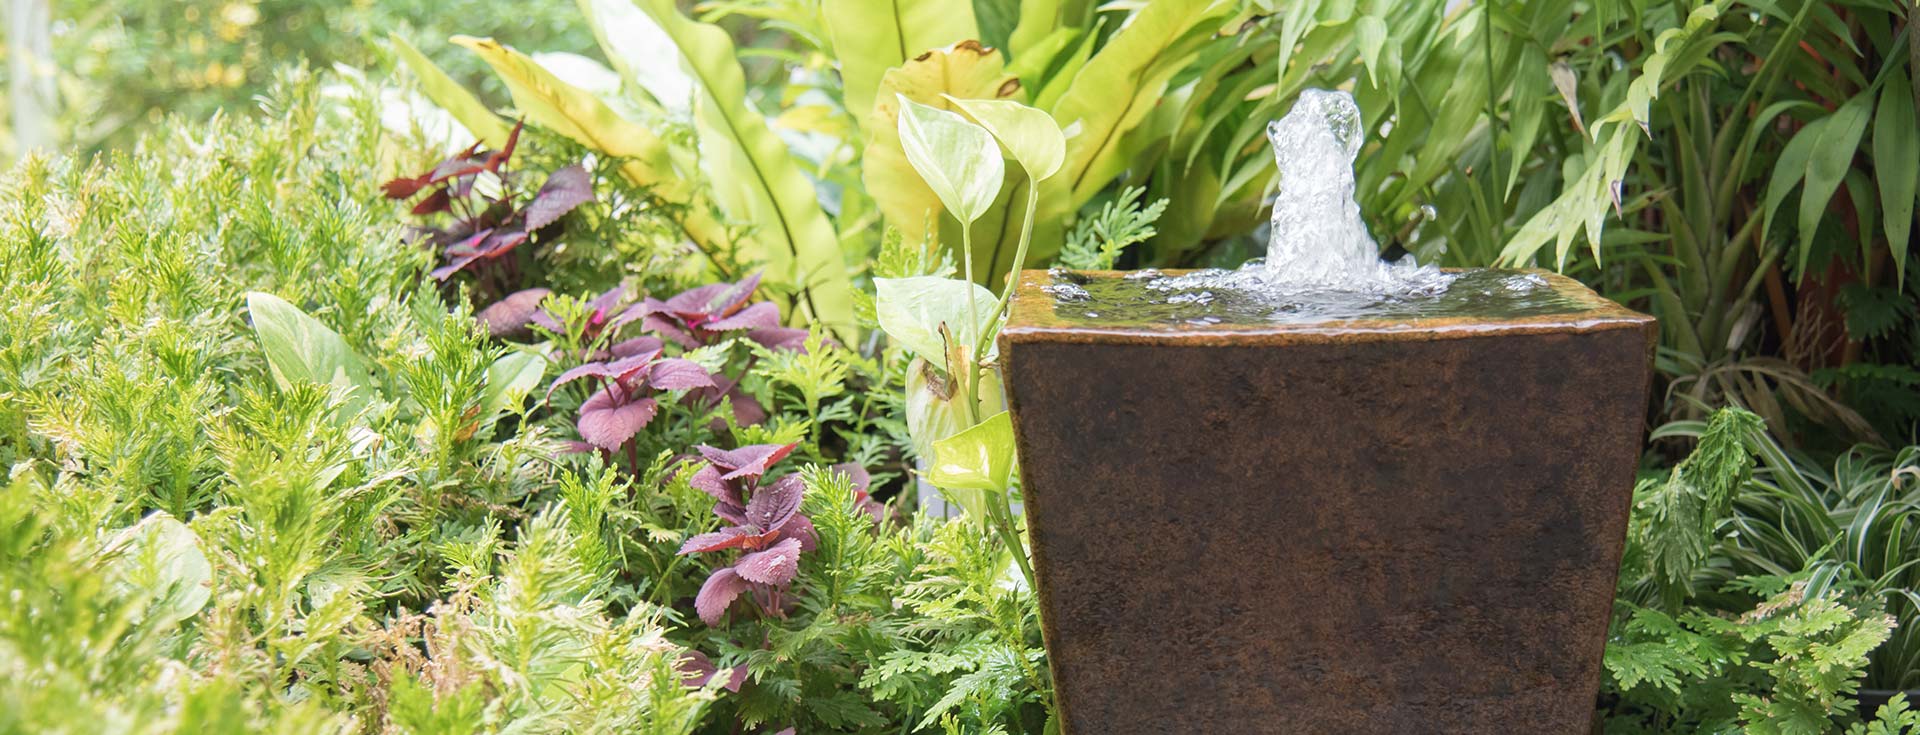 A fountain inside a cermic pot in a tropical garden